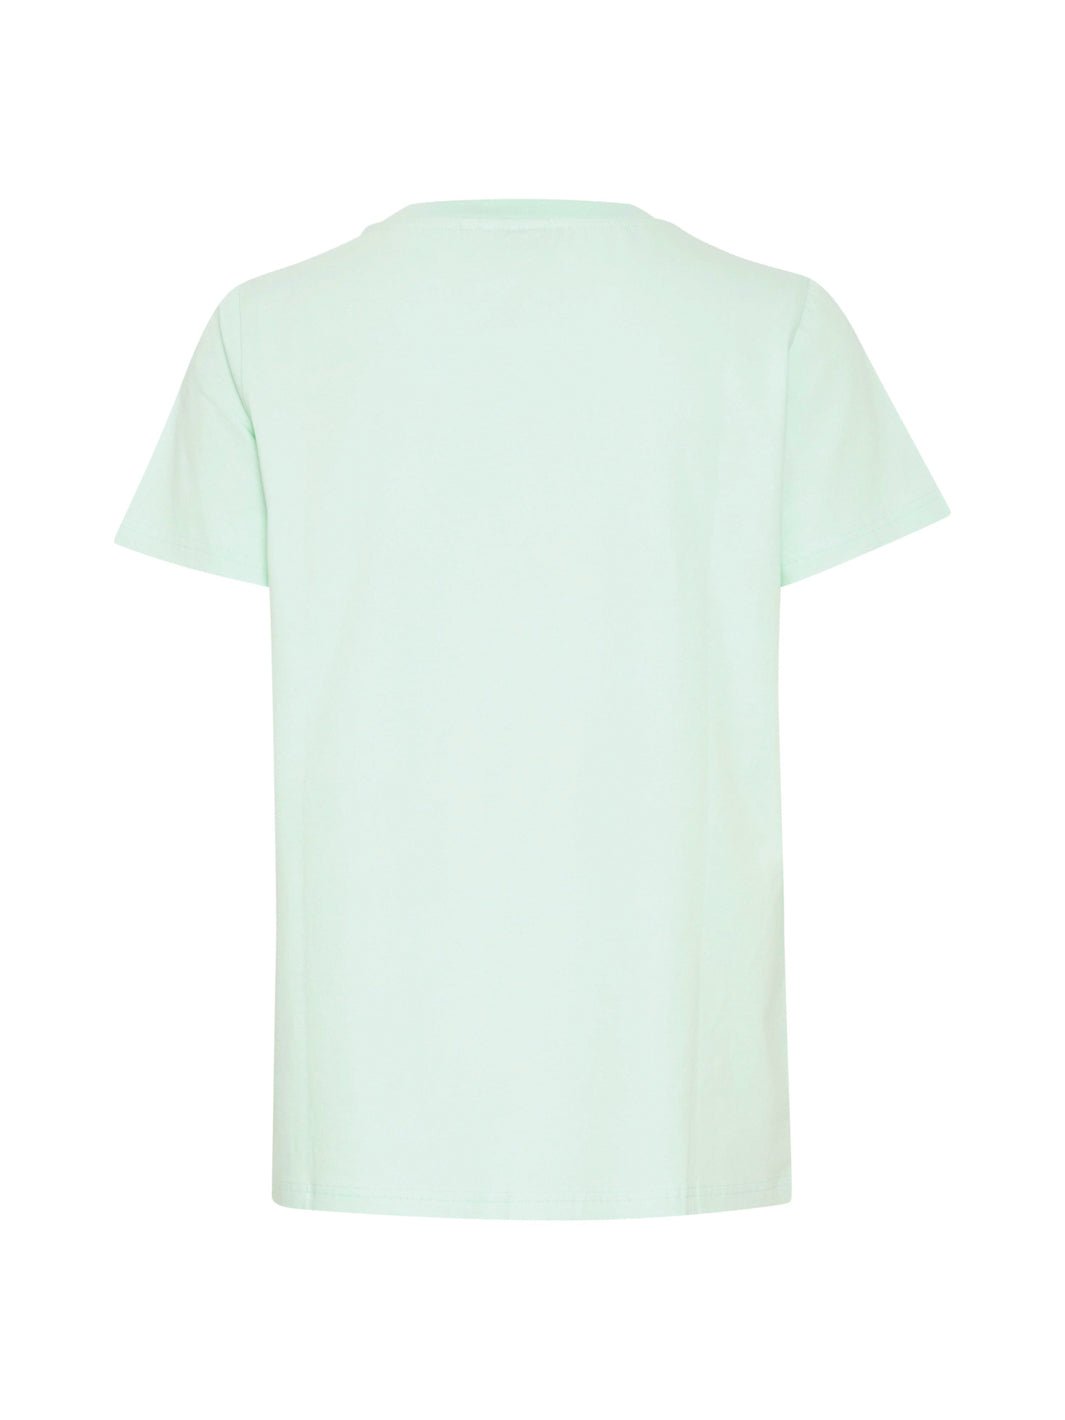 Fransa Zashoulder 1 t-shirt brook green - Online-Mode